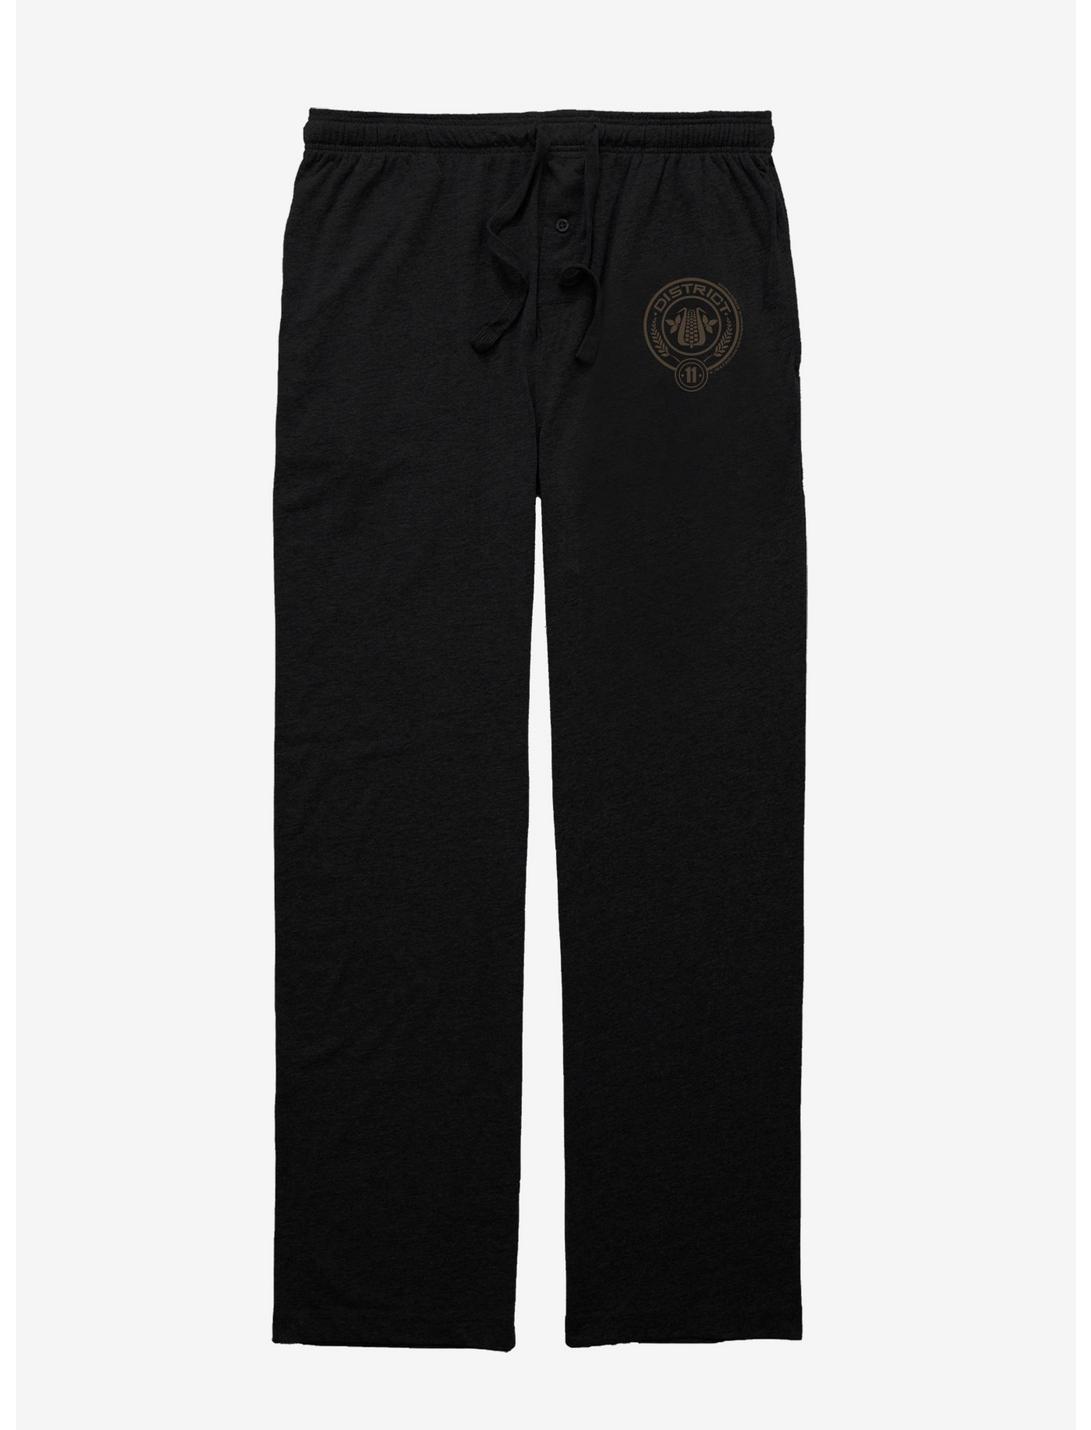 Hunger Games District 11 Emblem Pajama Pants, BLACK, hi-res